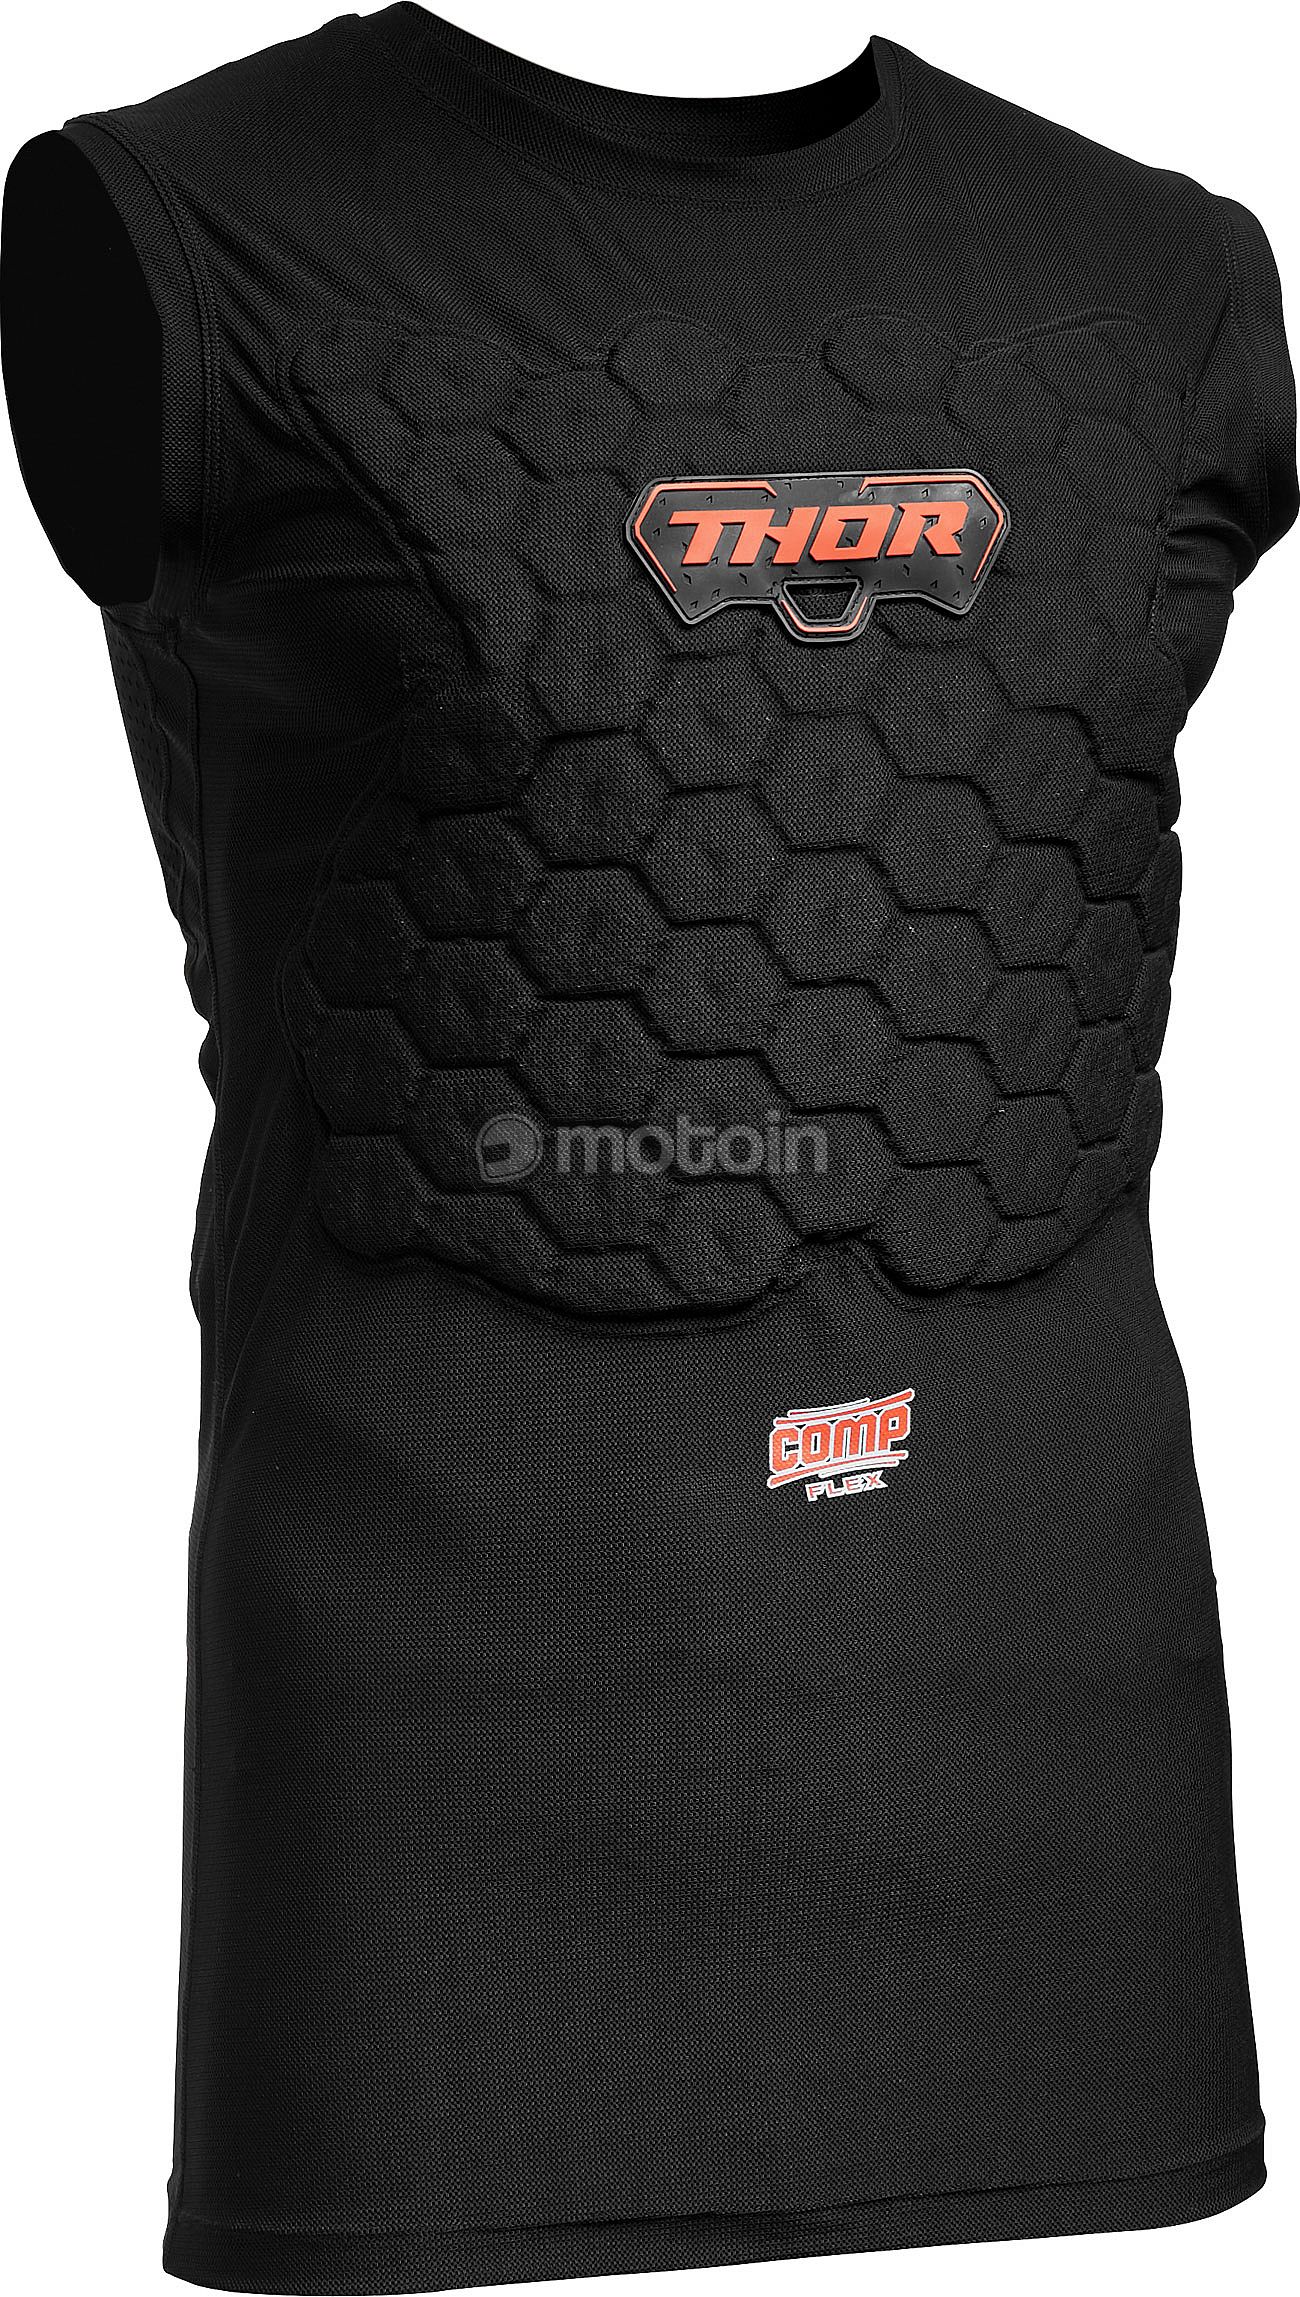 Thor Comp XP, camiseta funcional manga corta